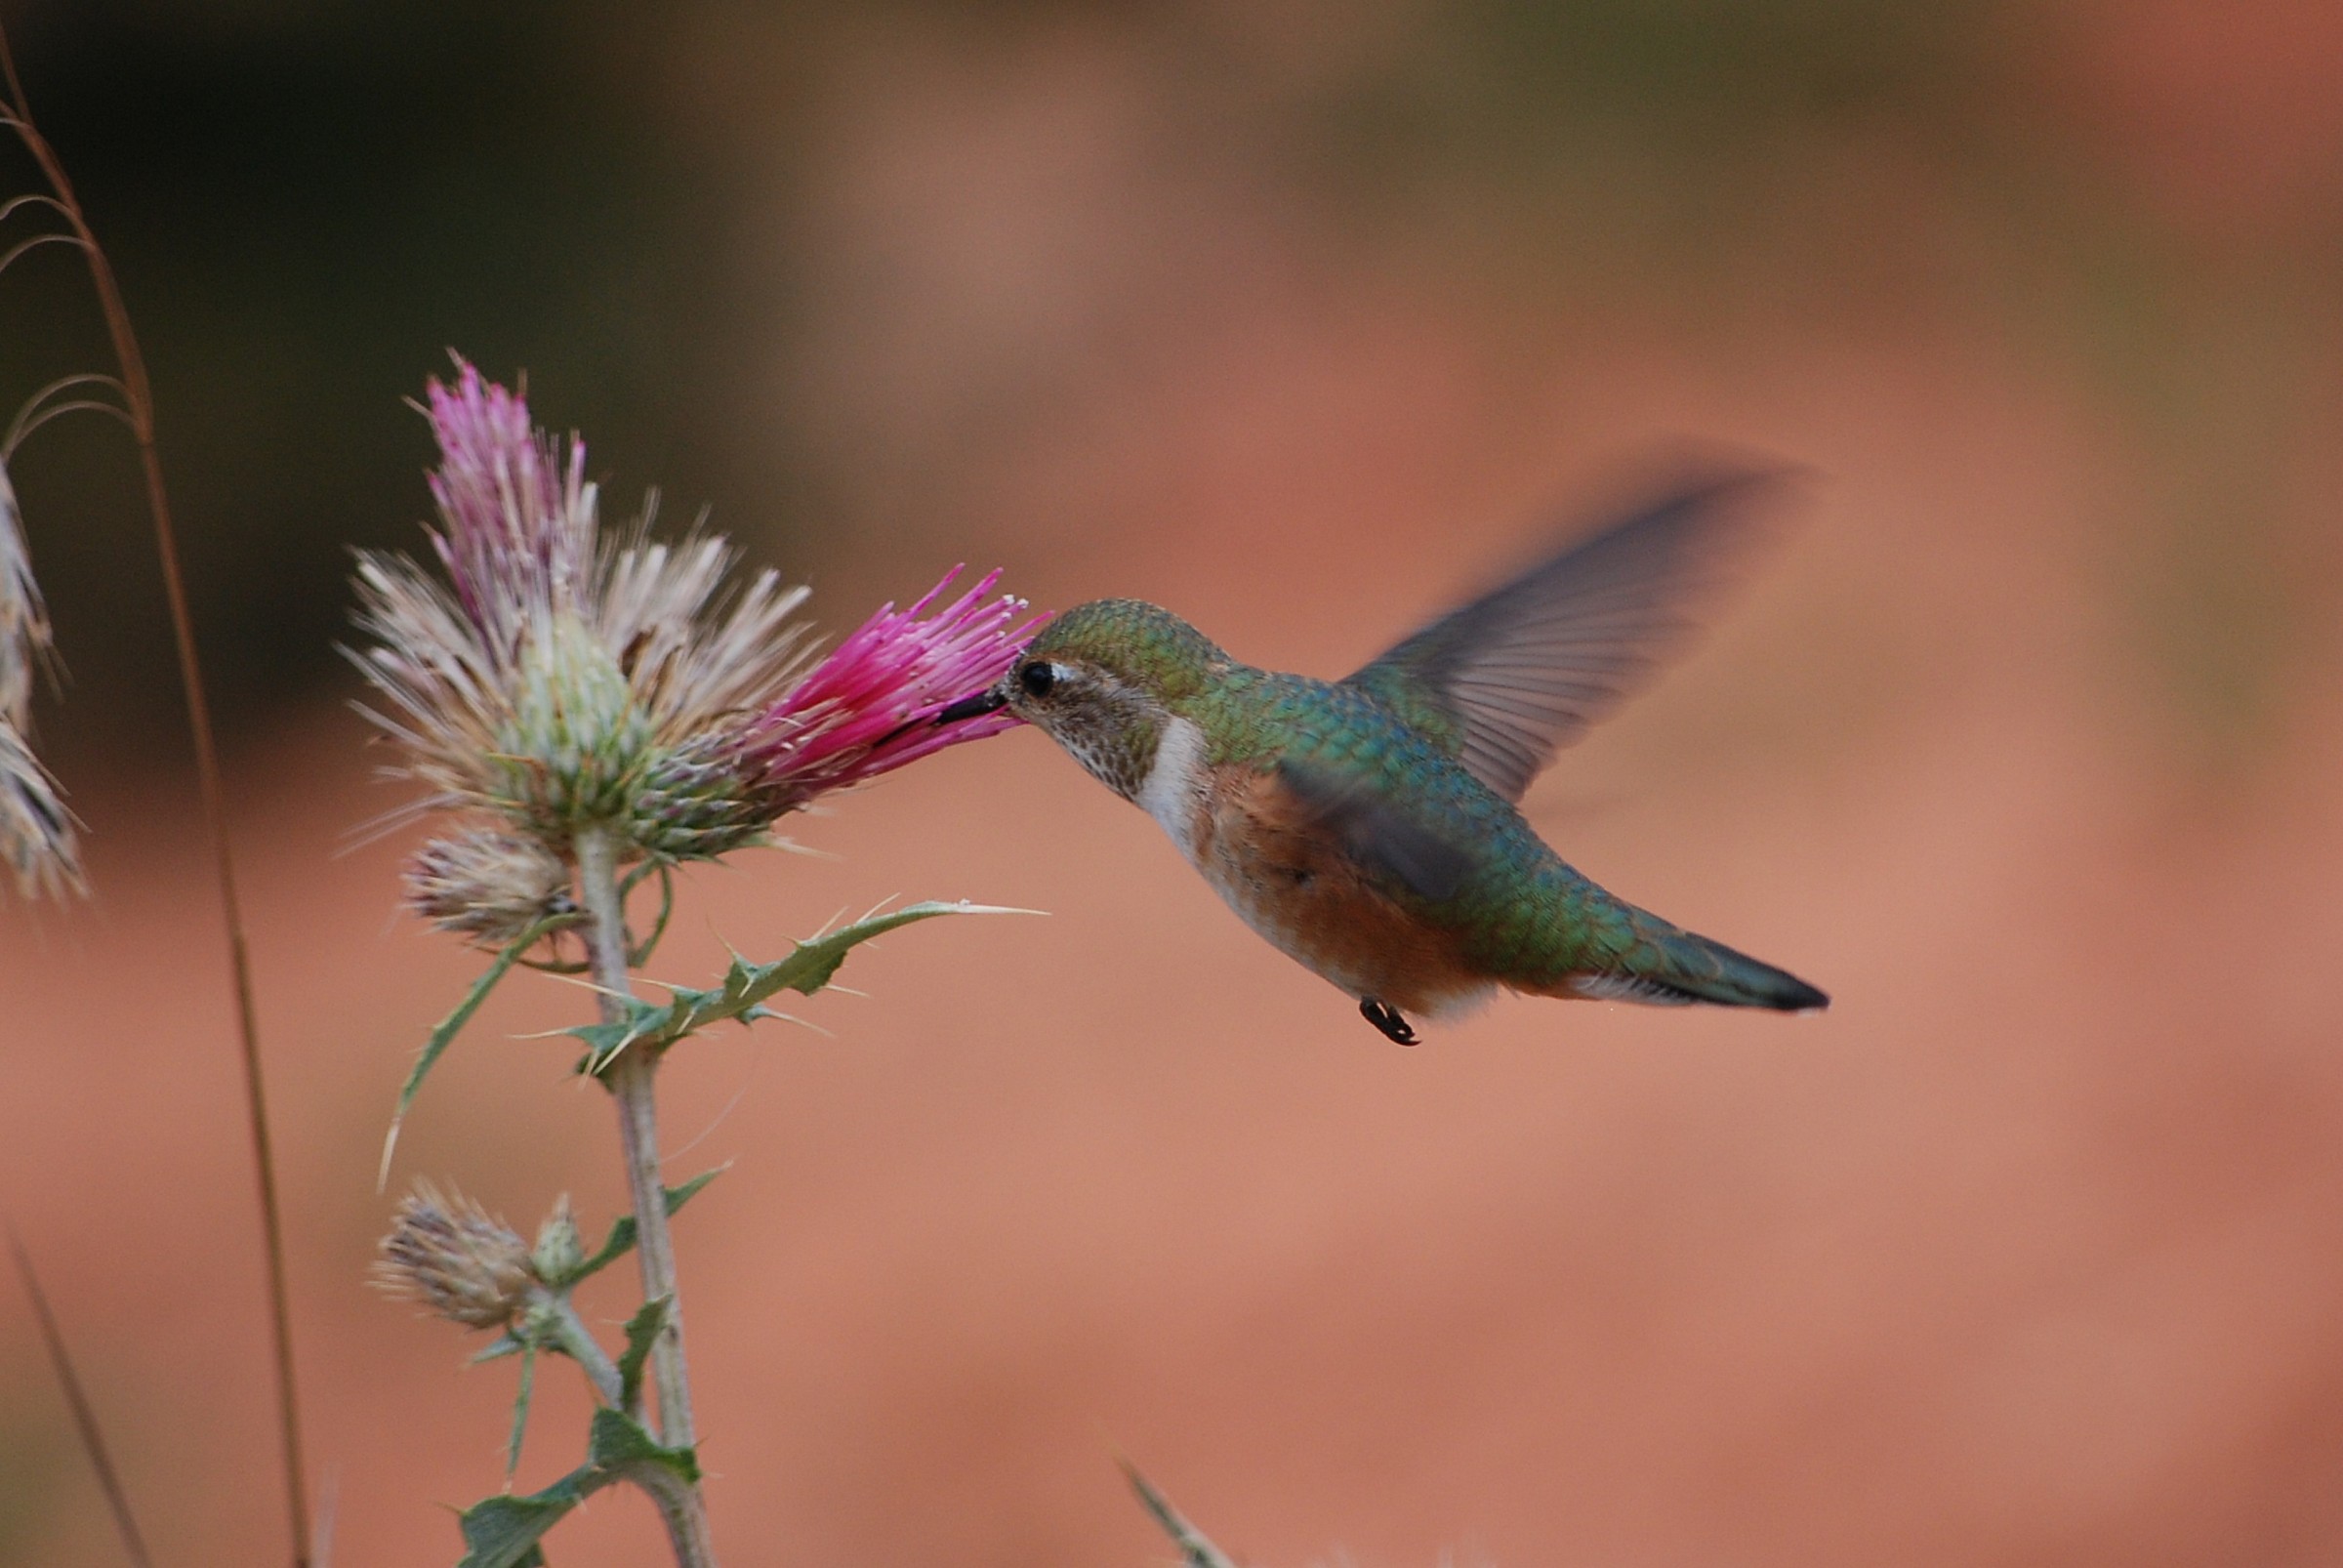 hummingbird at work...